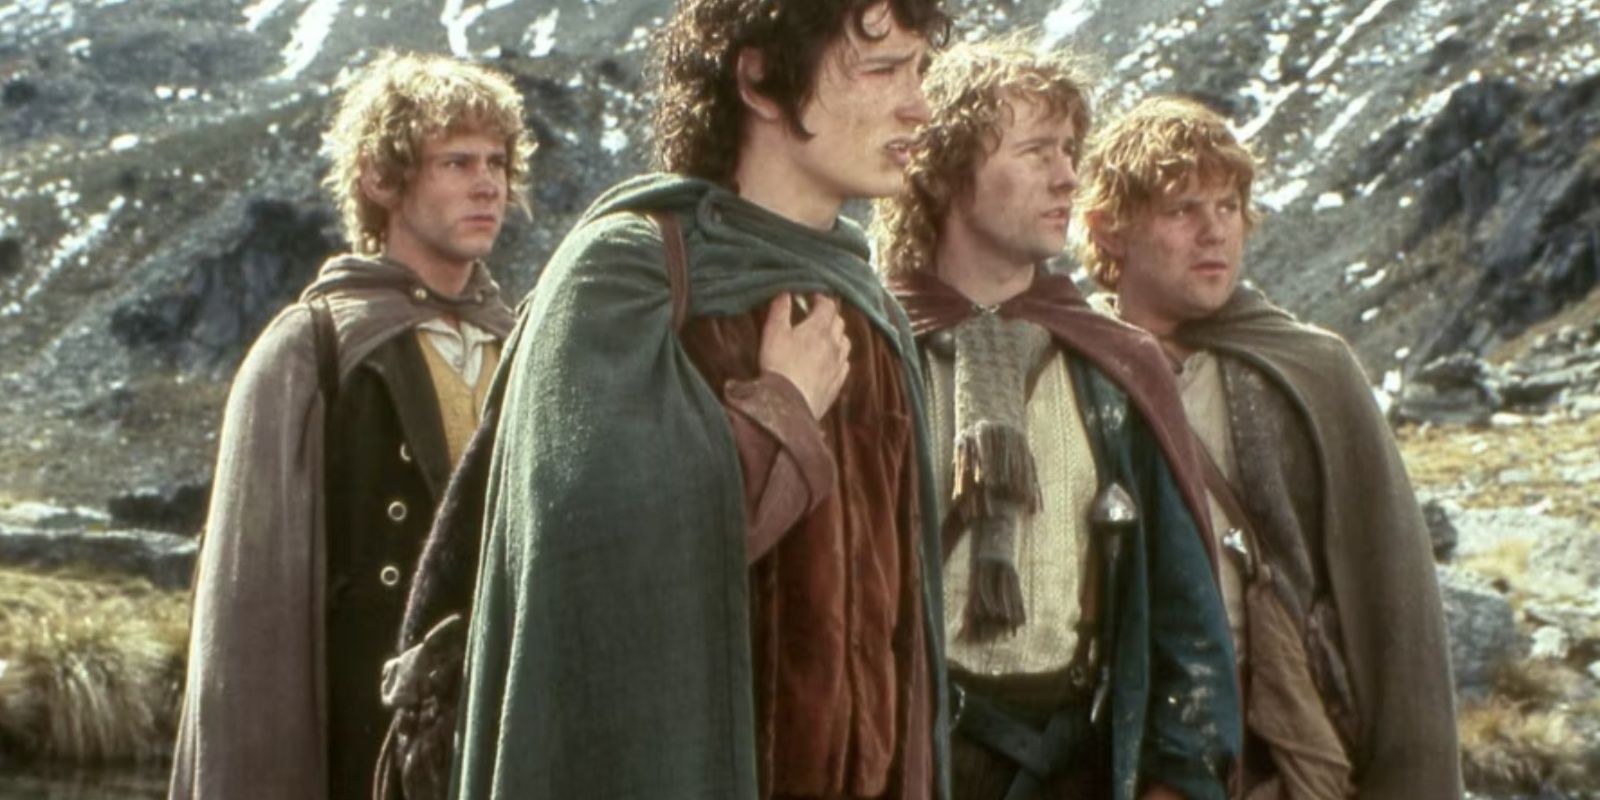 Dominic Monaghan as Merry. Elijah Wood as Frodo. Billy Boyd as Pippin. Sean Astin as Sam.